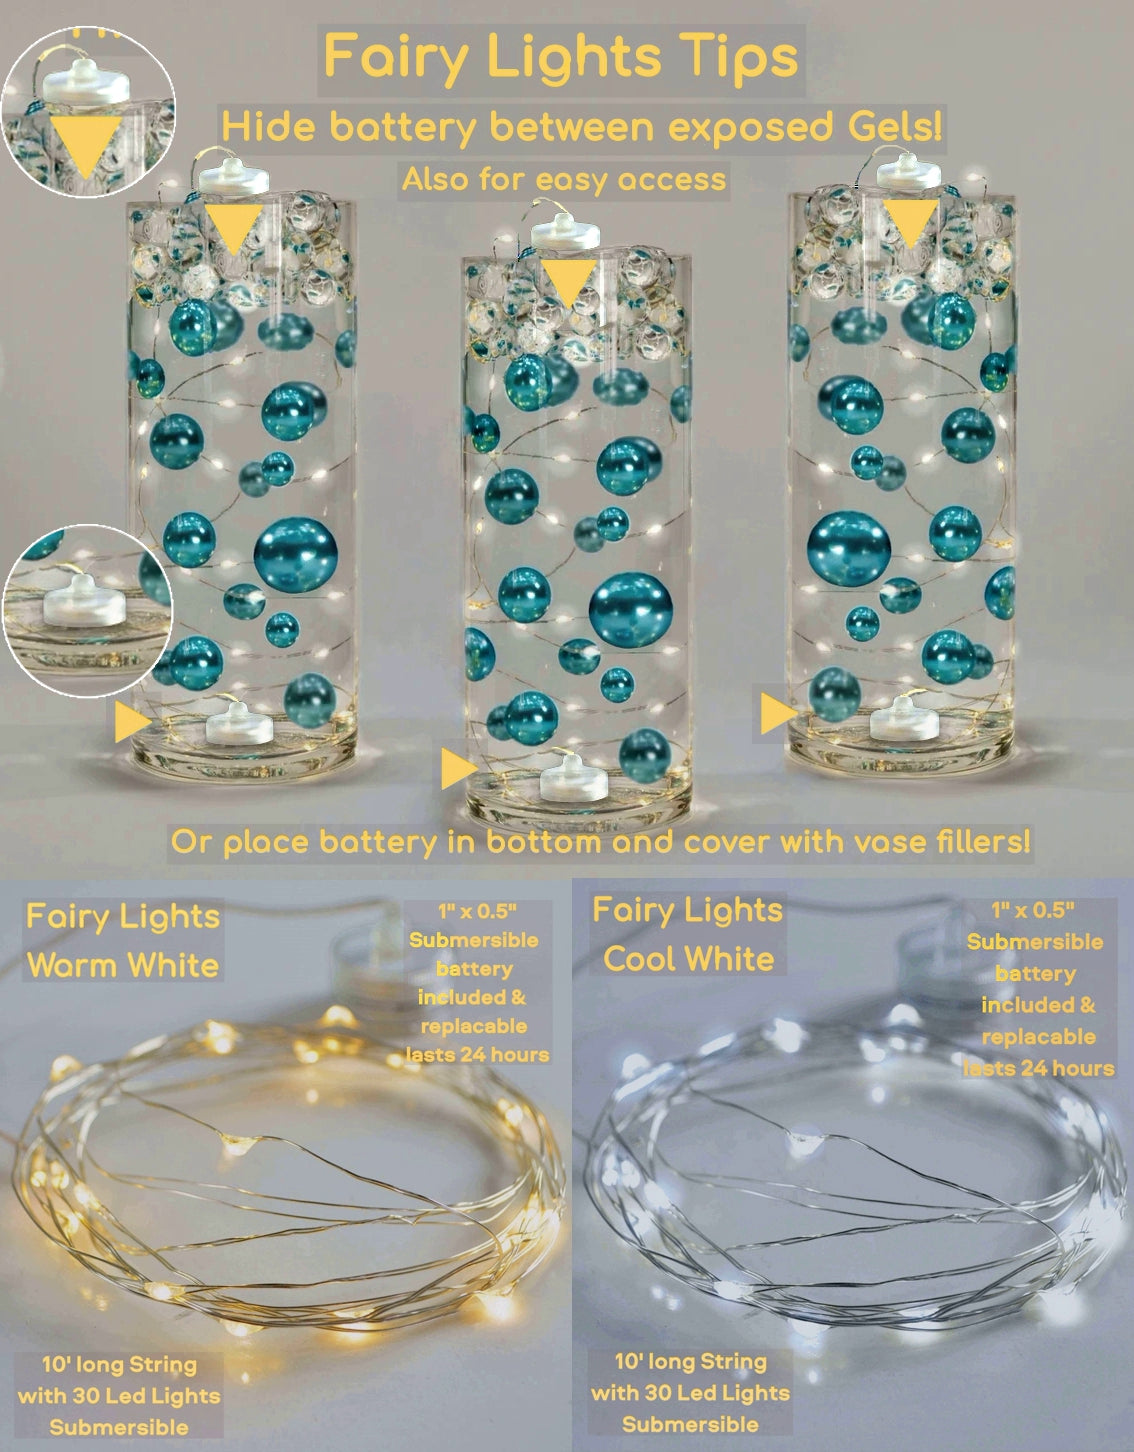 Blue Water Beads - Wholesale Water Beads Australia